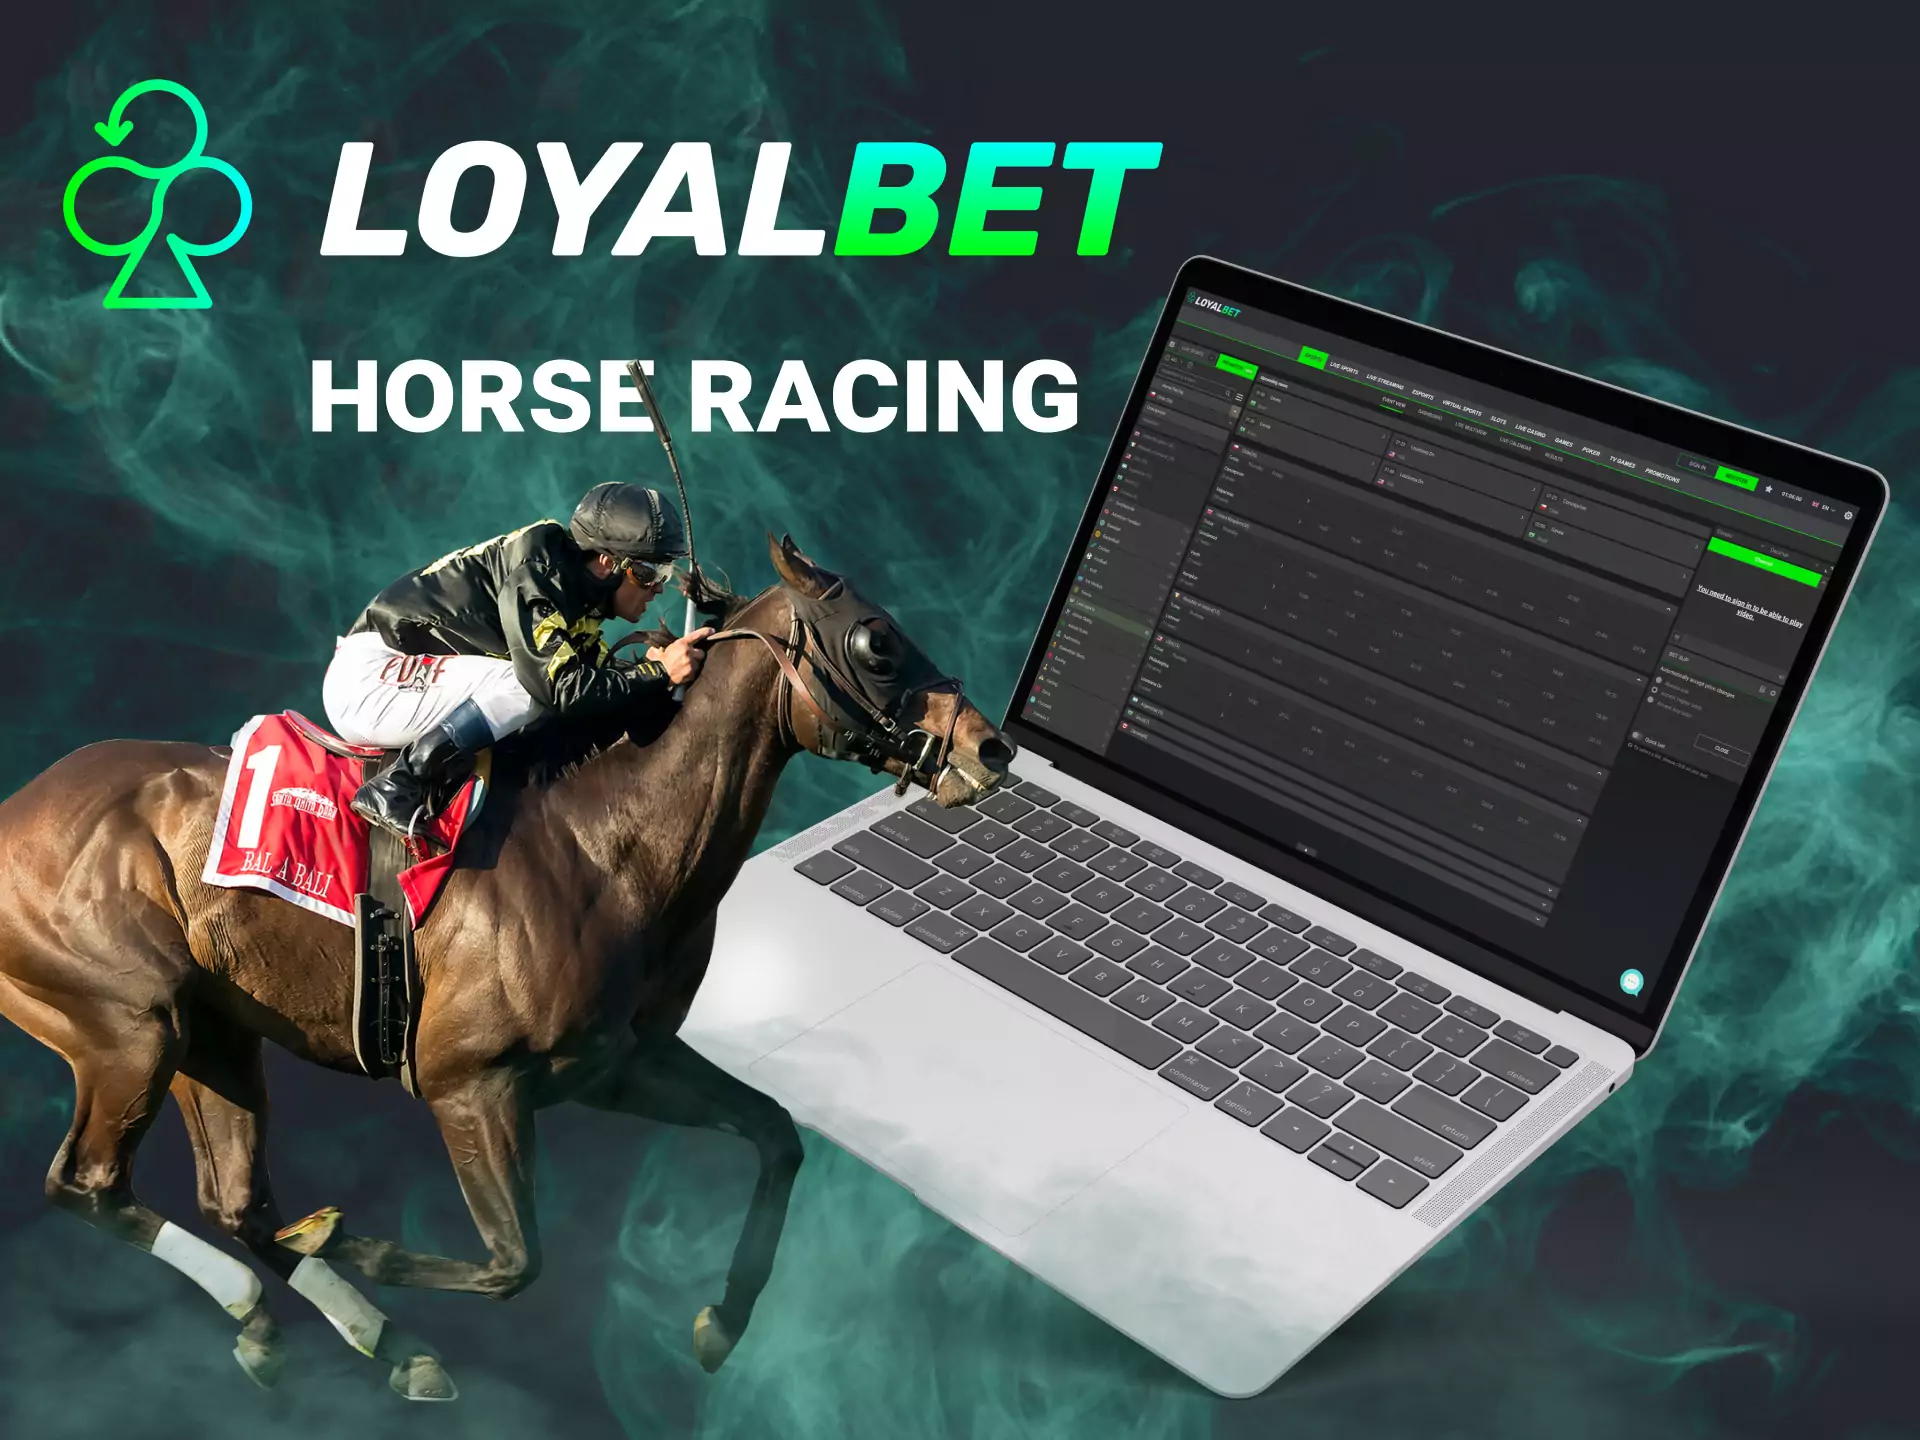 Bet online on horse racing on the Loyalbet website.